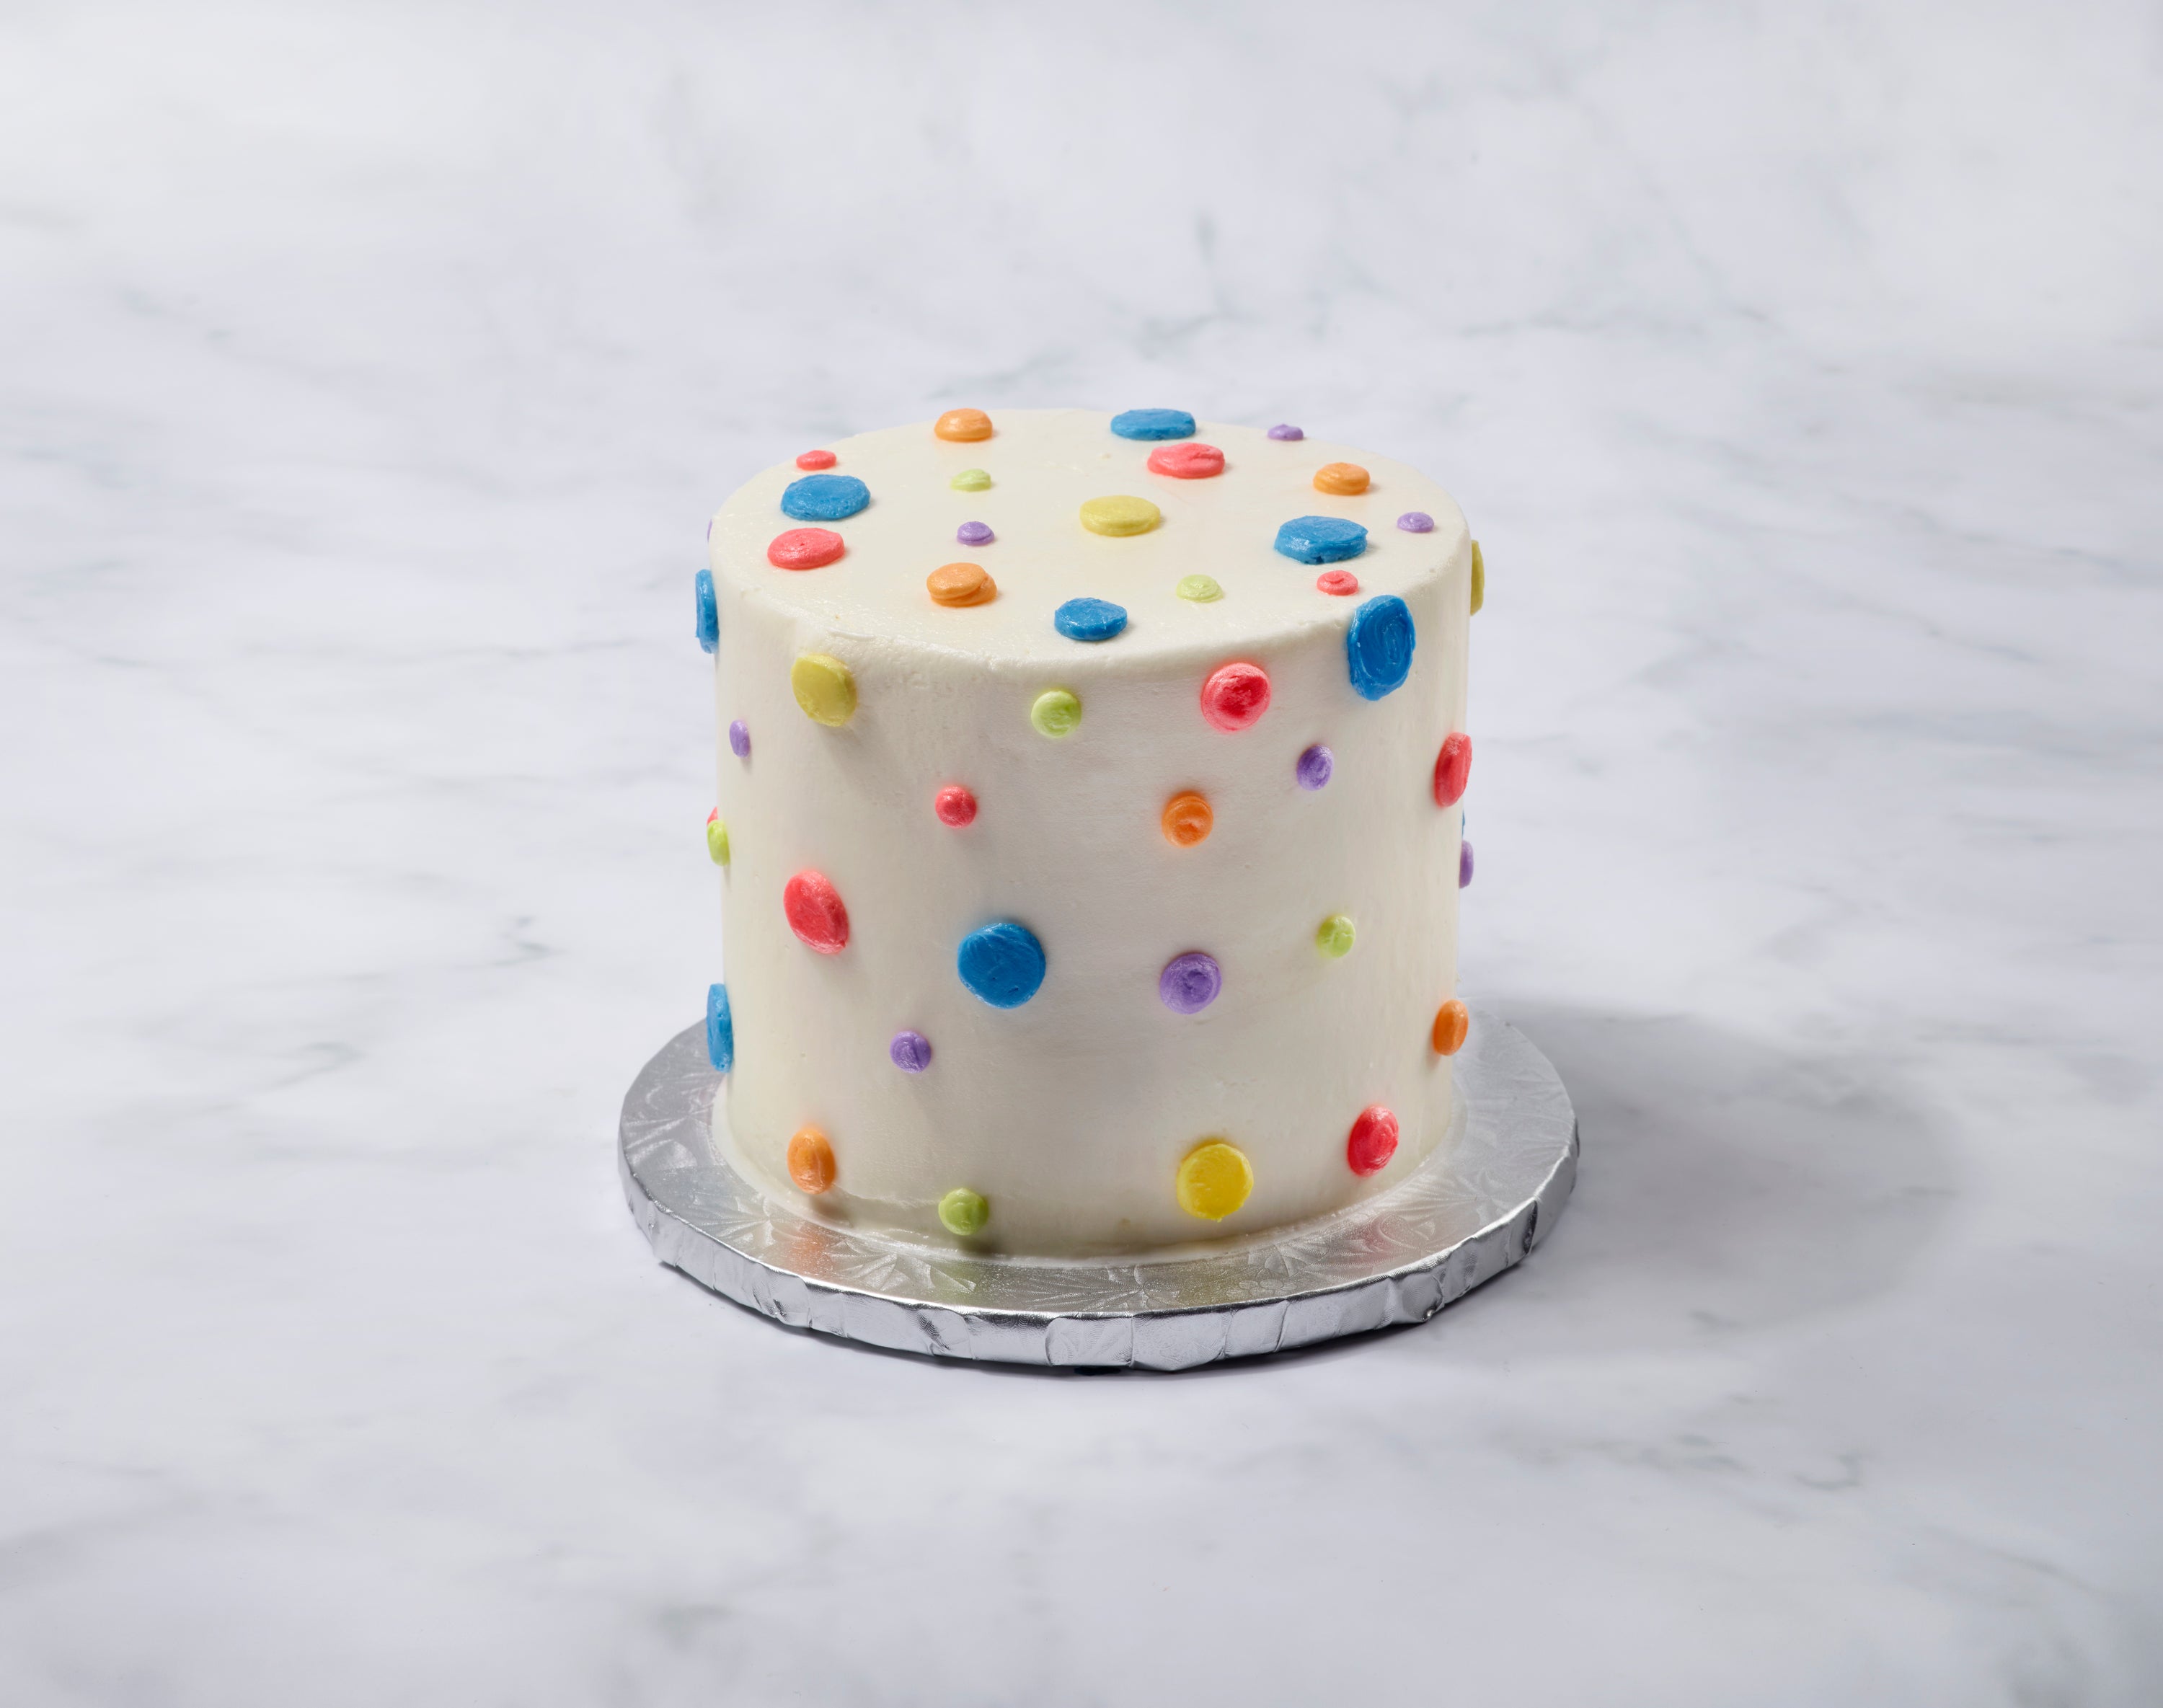 Chocolate polka dot birthday cake hi-res stock photography and images -  Alamy